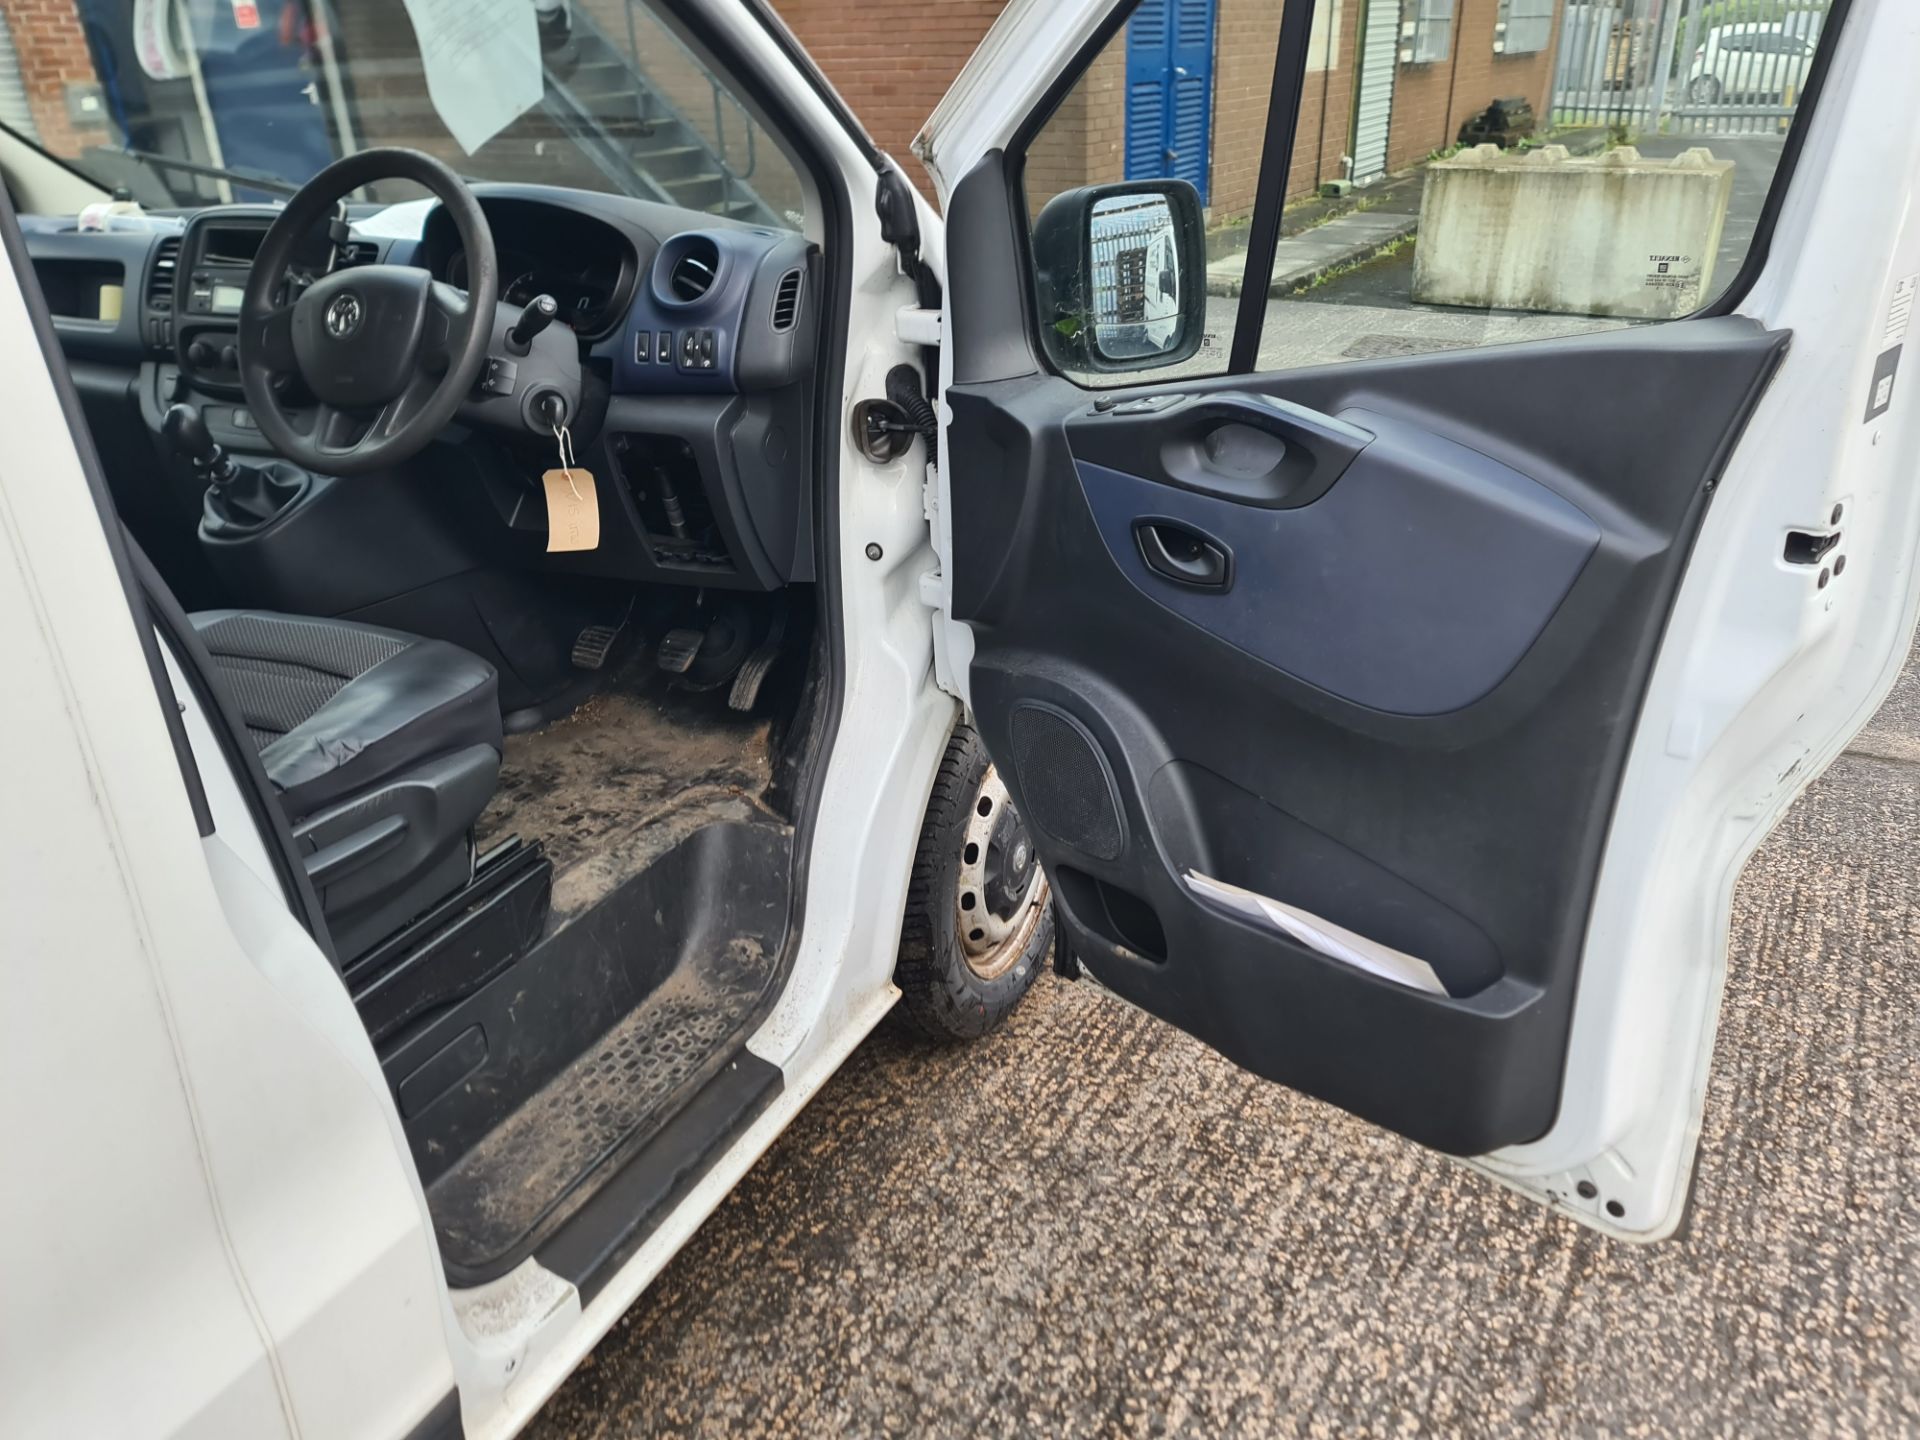 2015 Vauxhall Vivaro 2900 CDTi panel van - Image 9 of 81